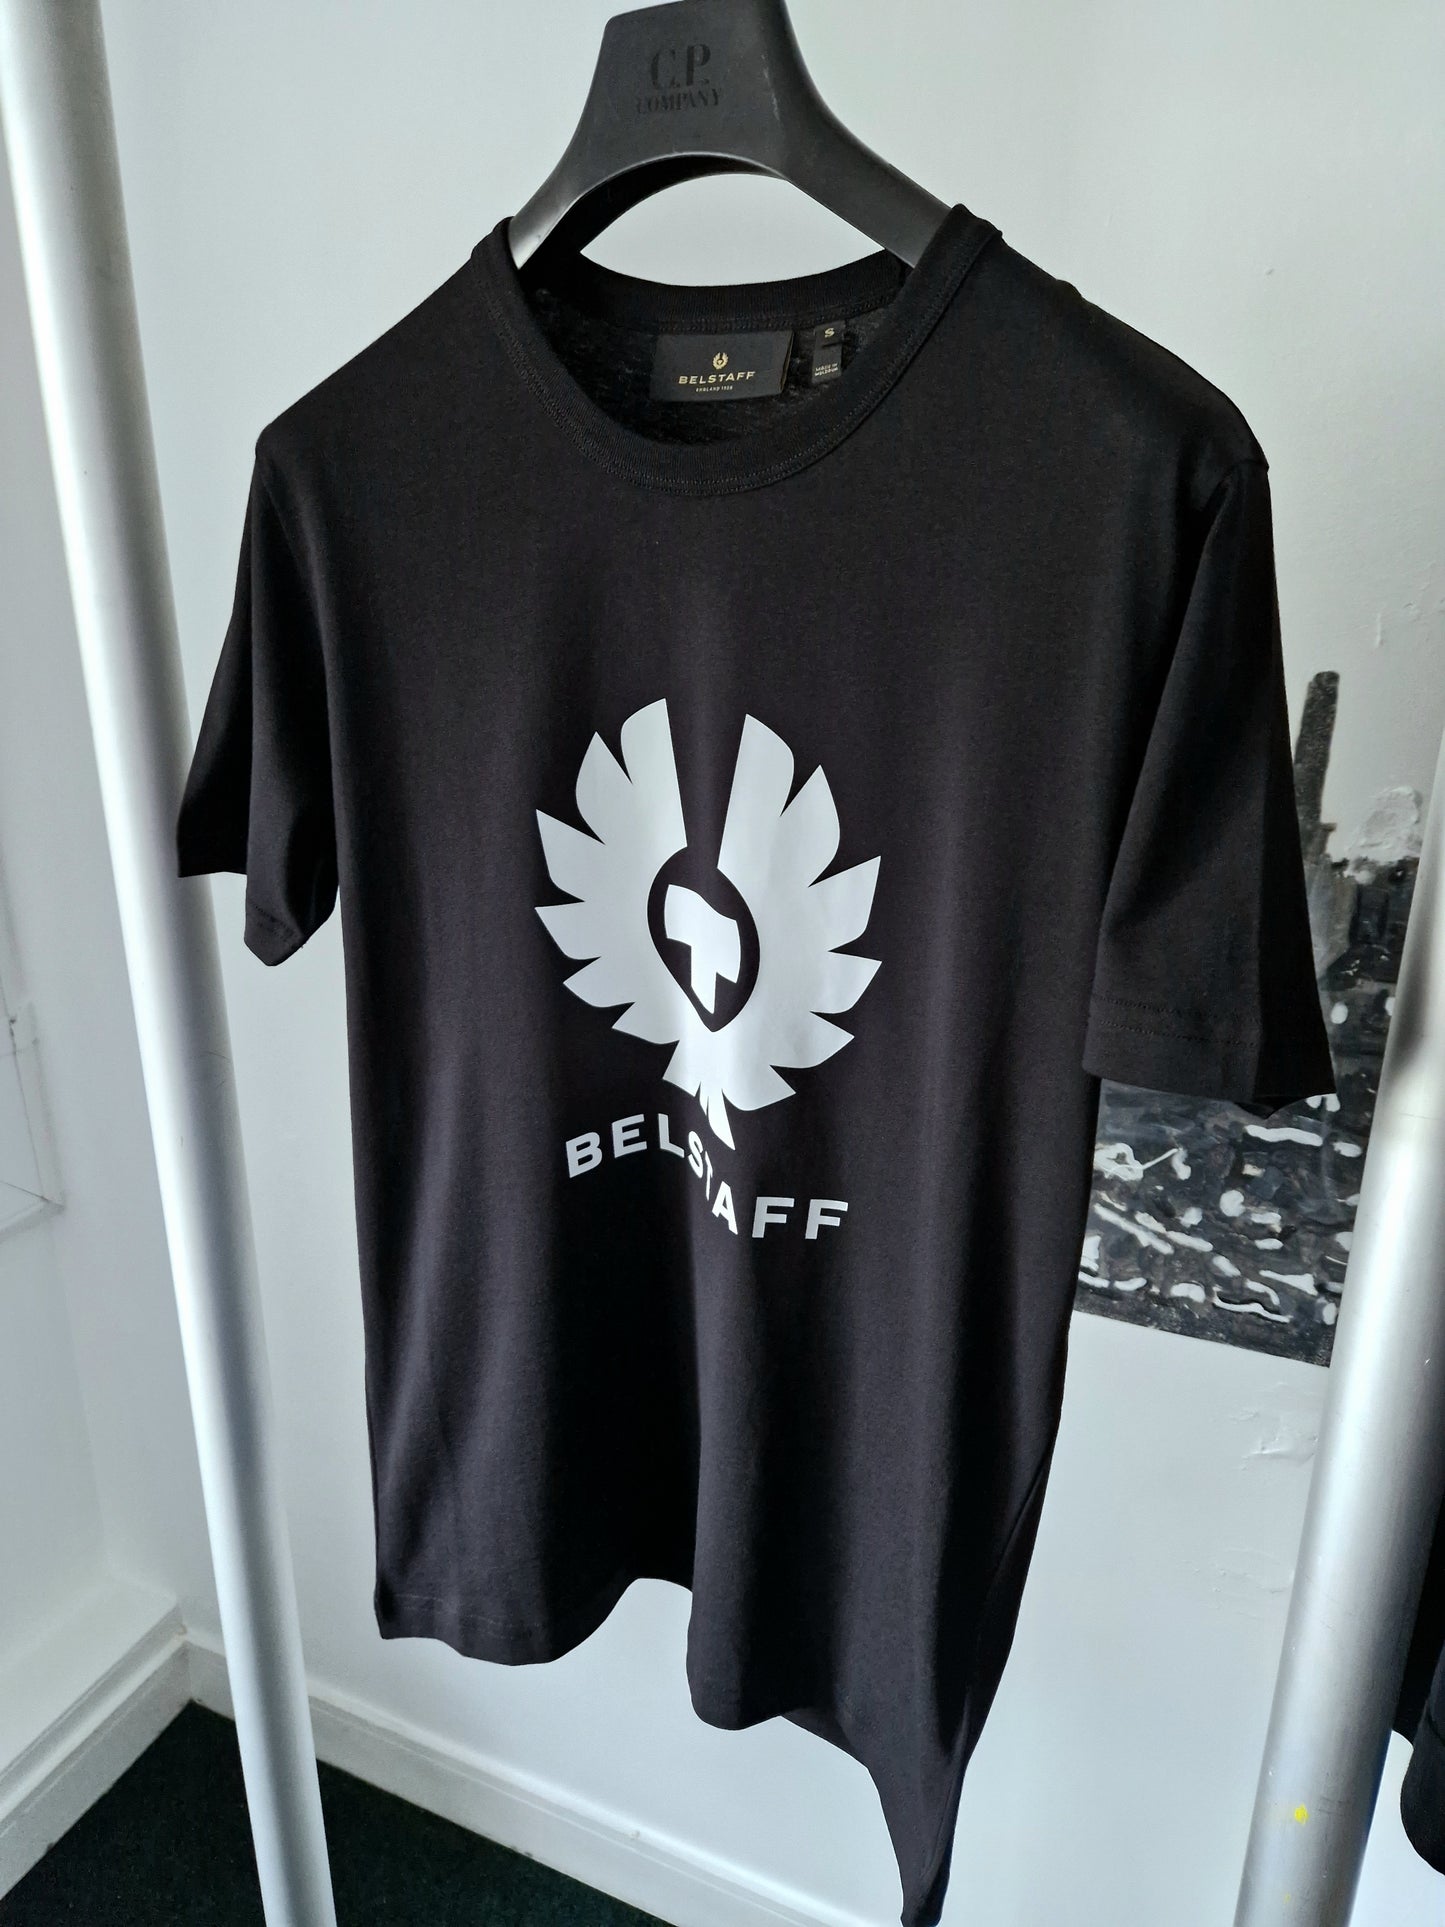 Belstaff Large Logo T-Shirt - Black